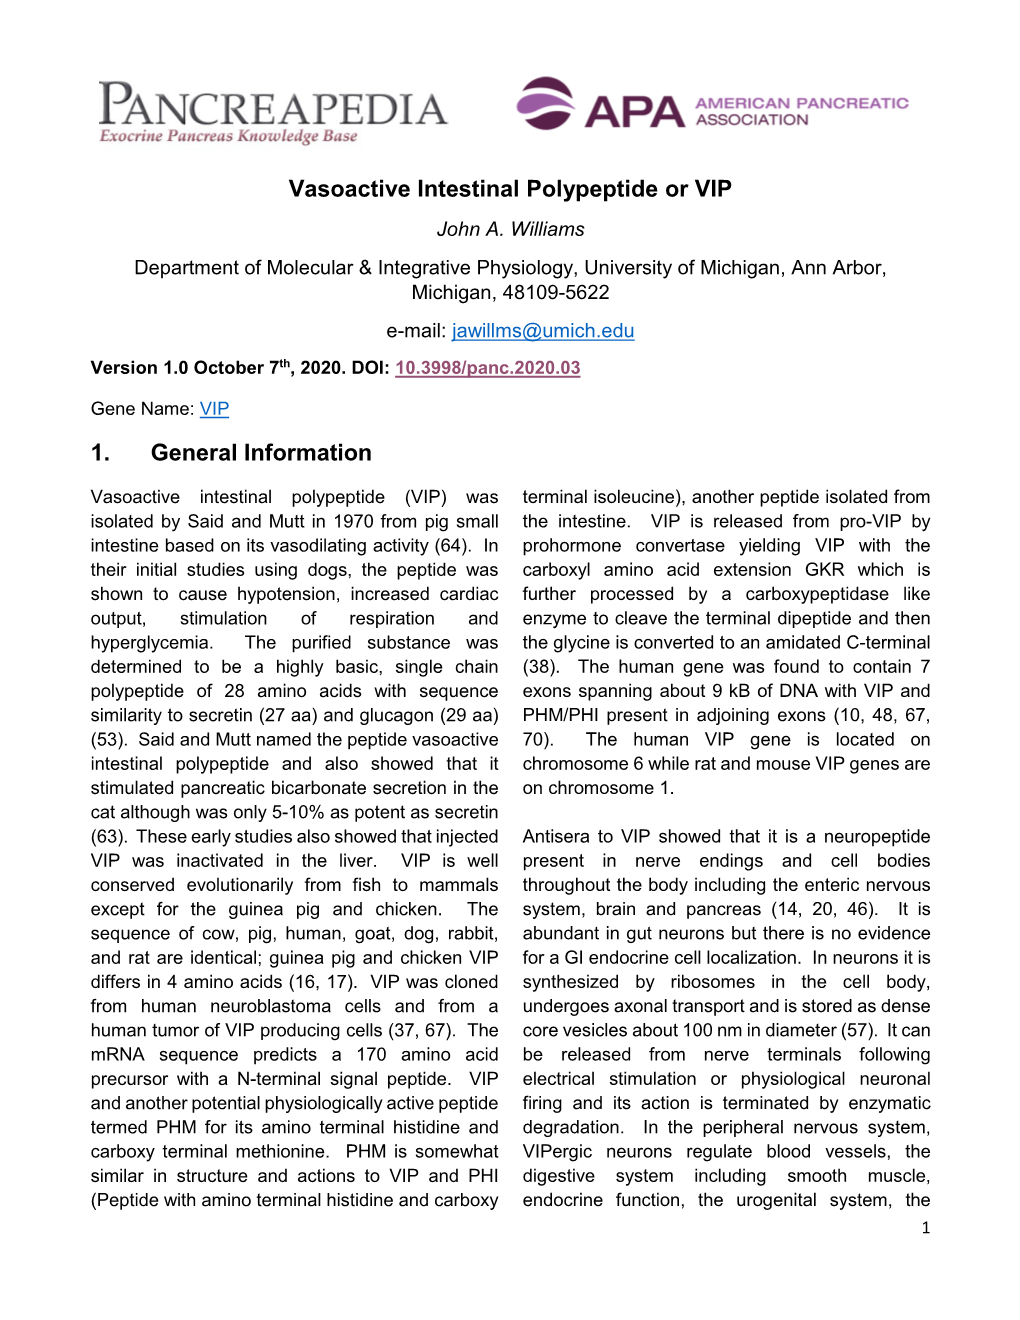 Vasoactive Intestinal Polypeptide Or VIP John A